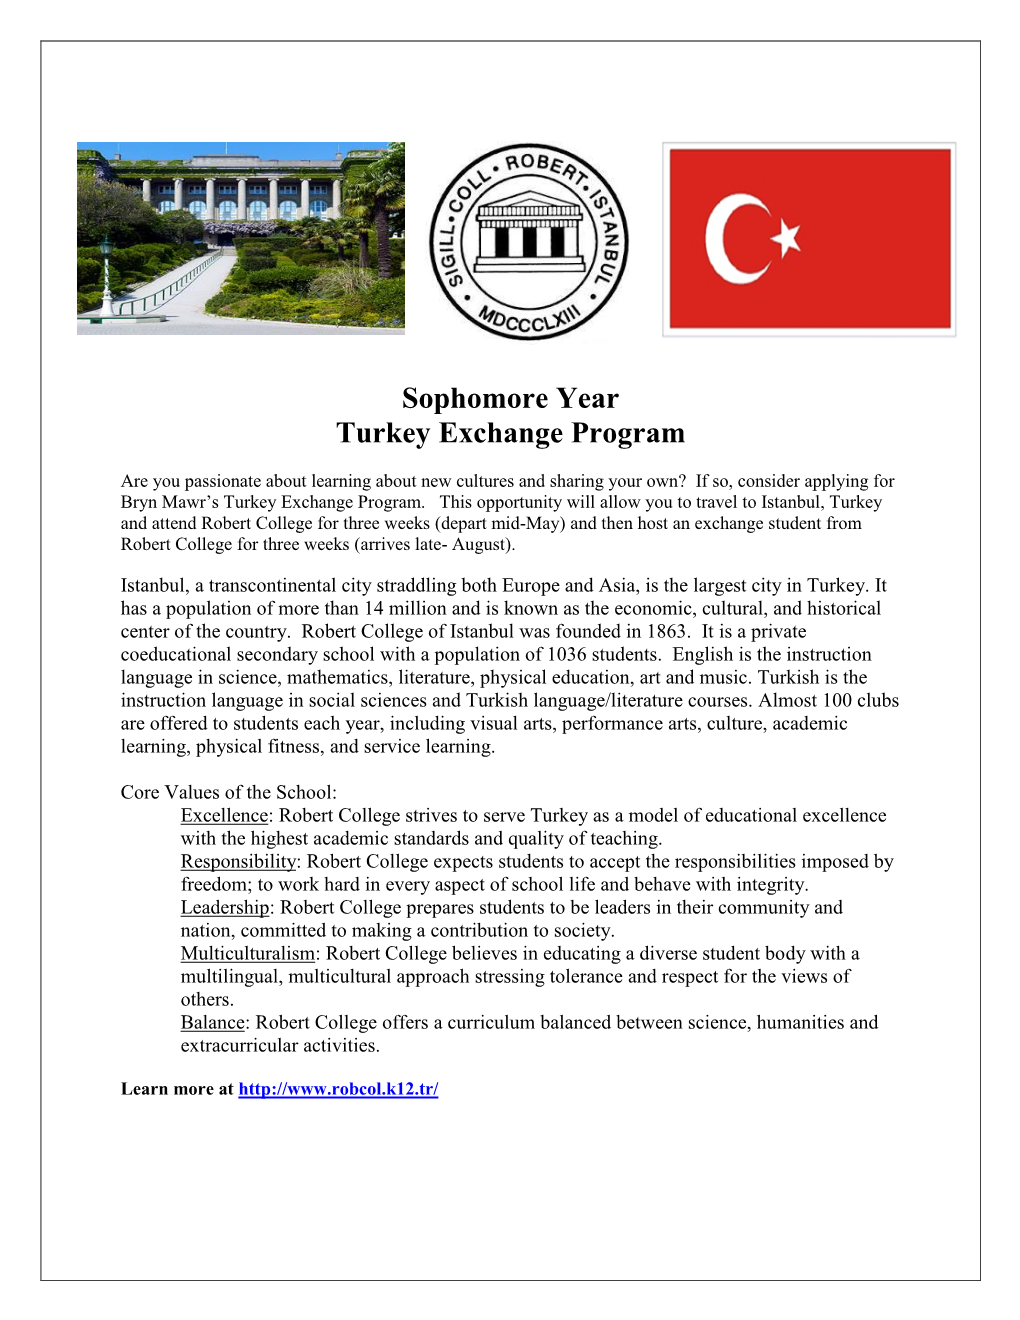 Sophomore Year Turkey Exchange Program